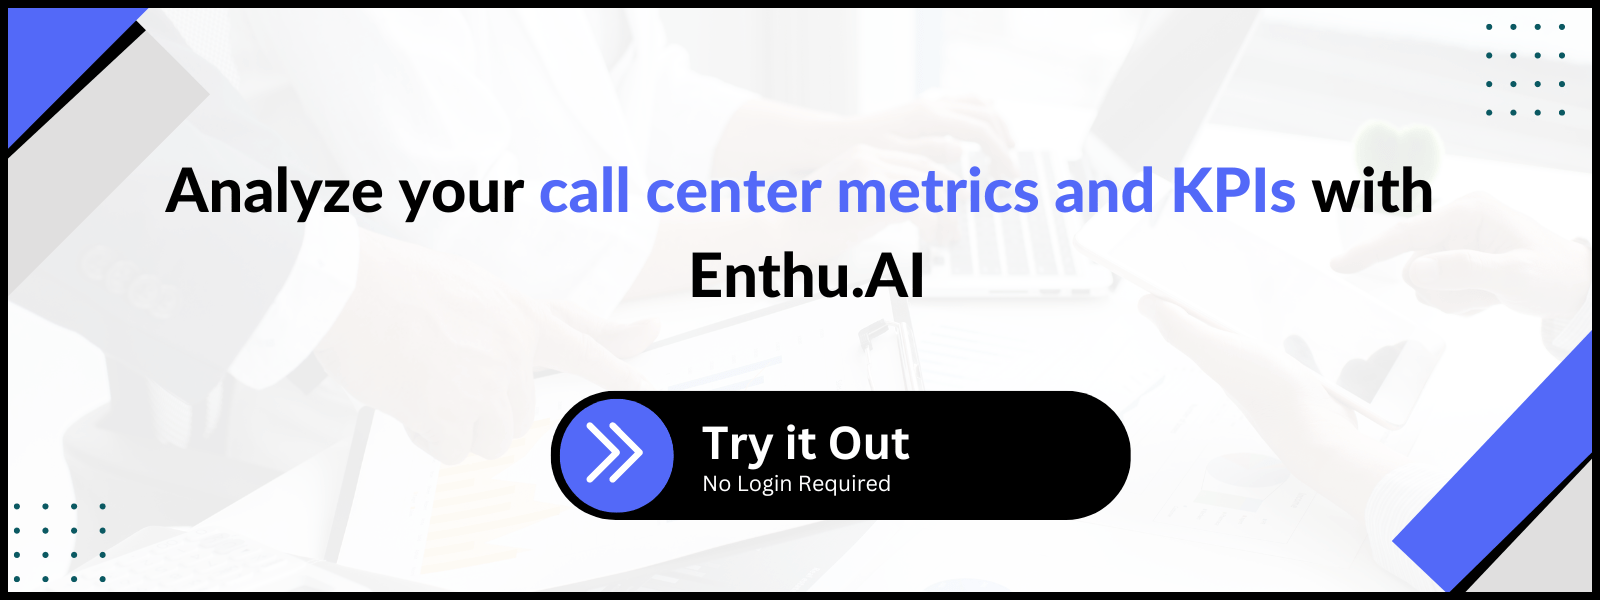 Call center metrics